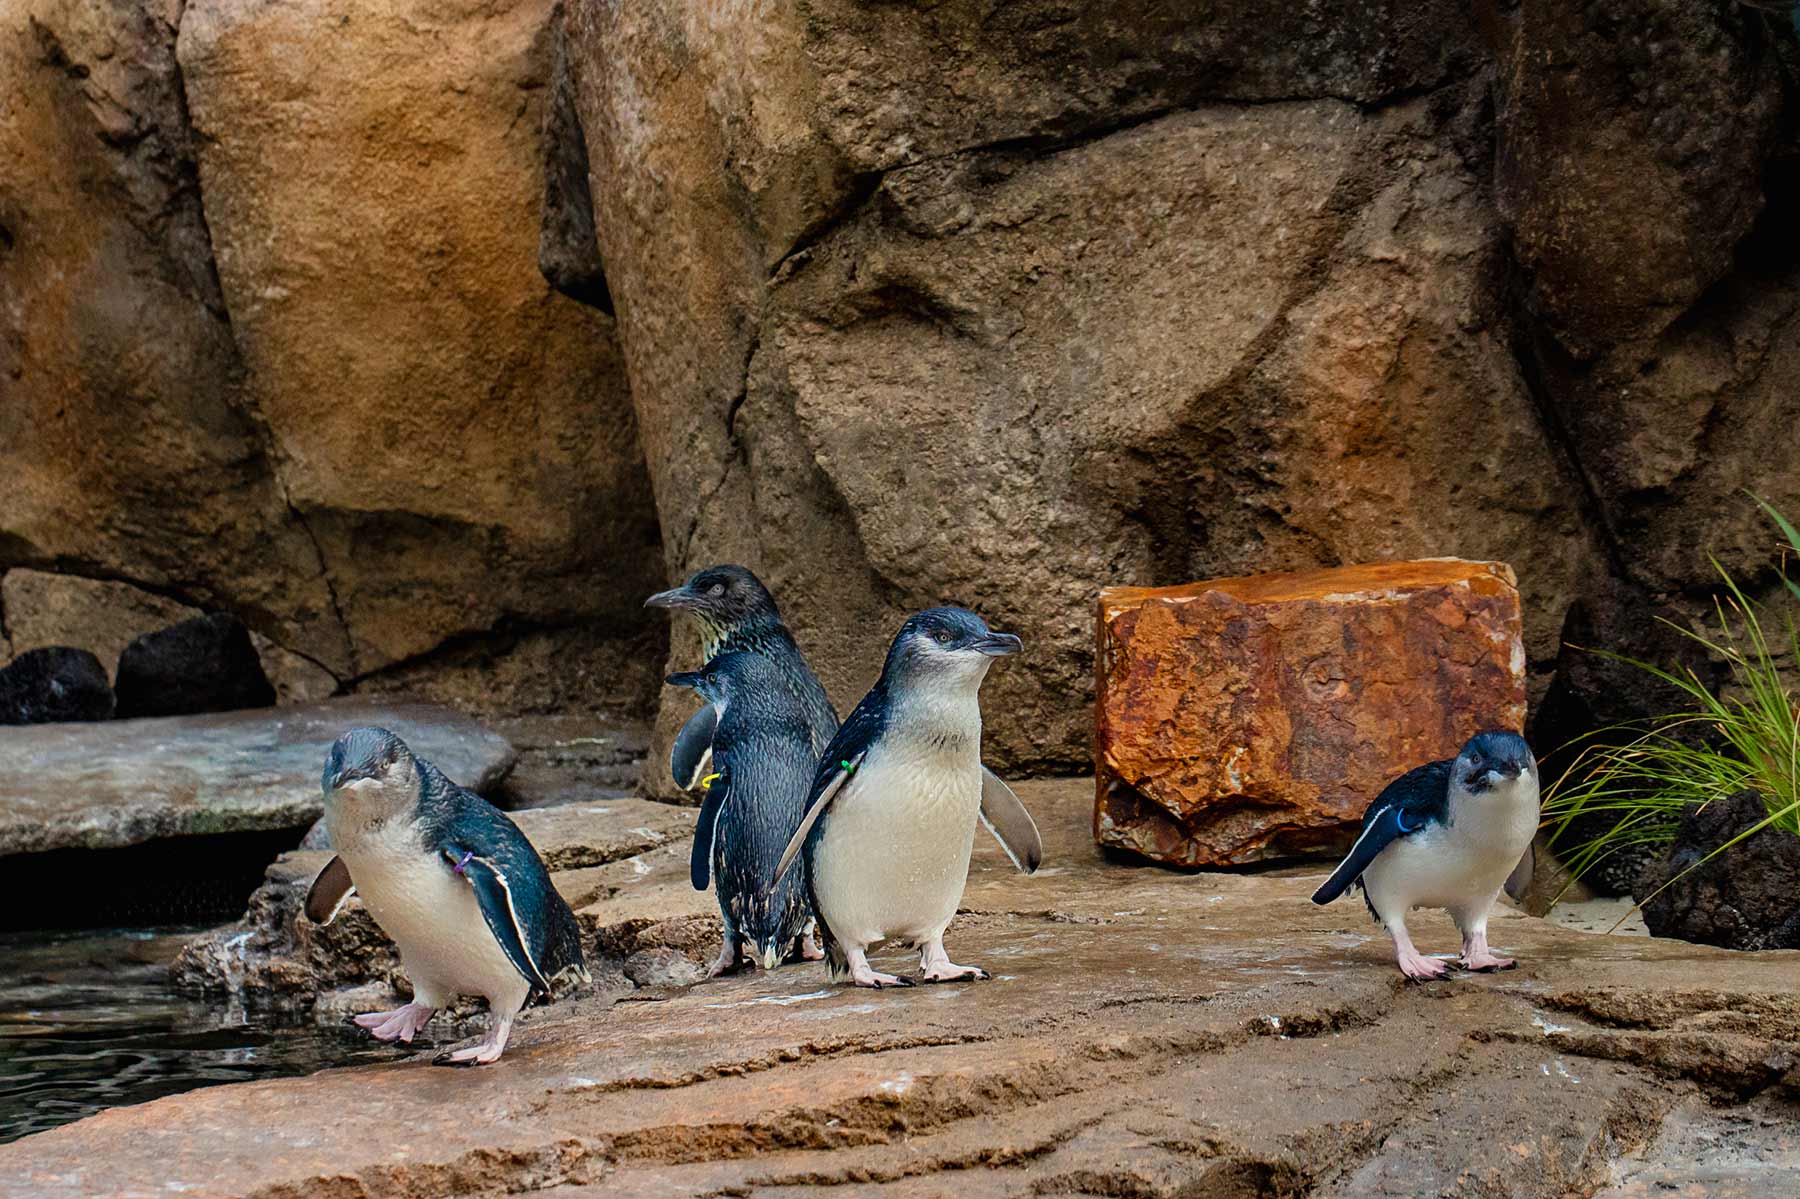 Penguins gather near the rocky shore area of the new habitat. Photo by Jordann Tomasek.